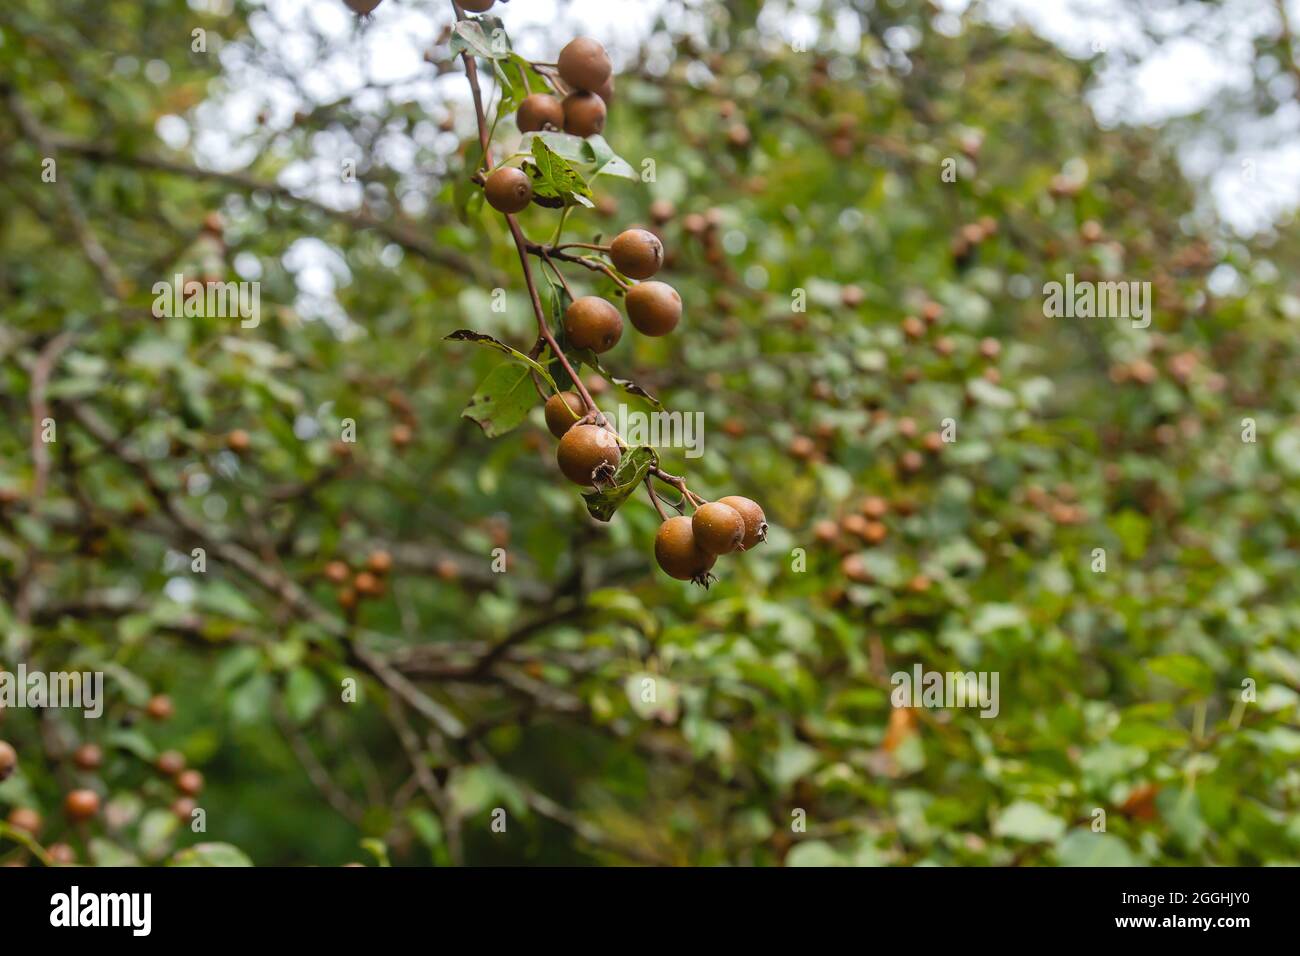 Pyrus cordata known as Plymouth pear wild tree fruits Stock Photo